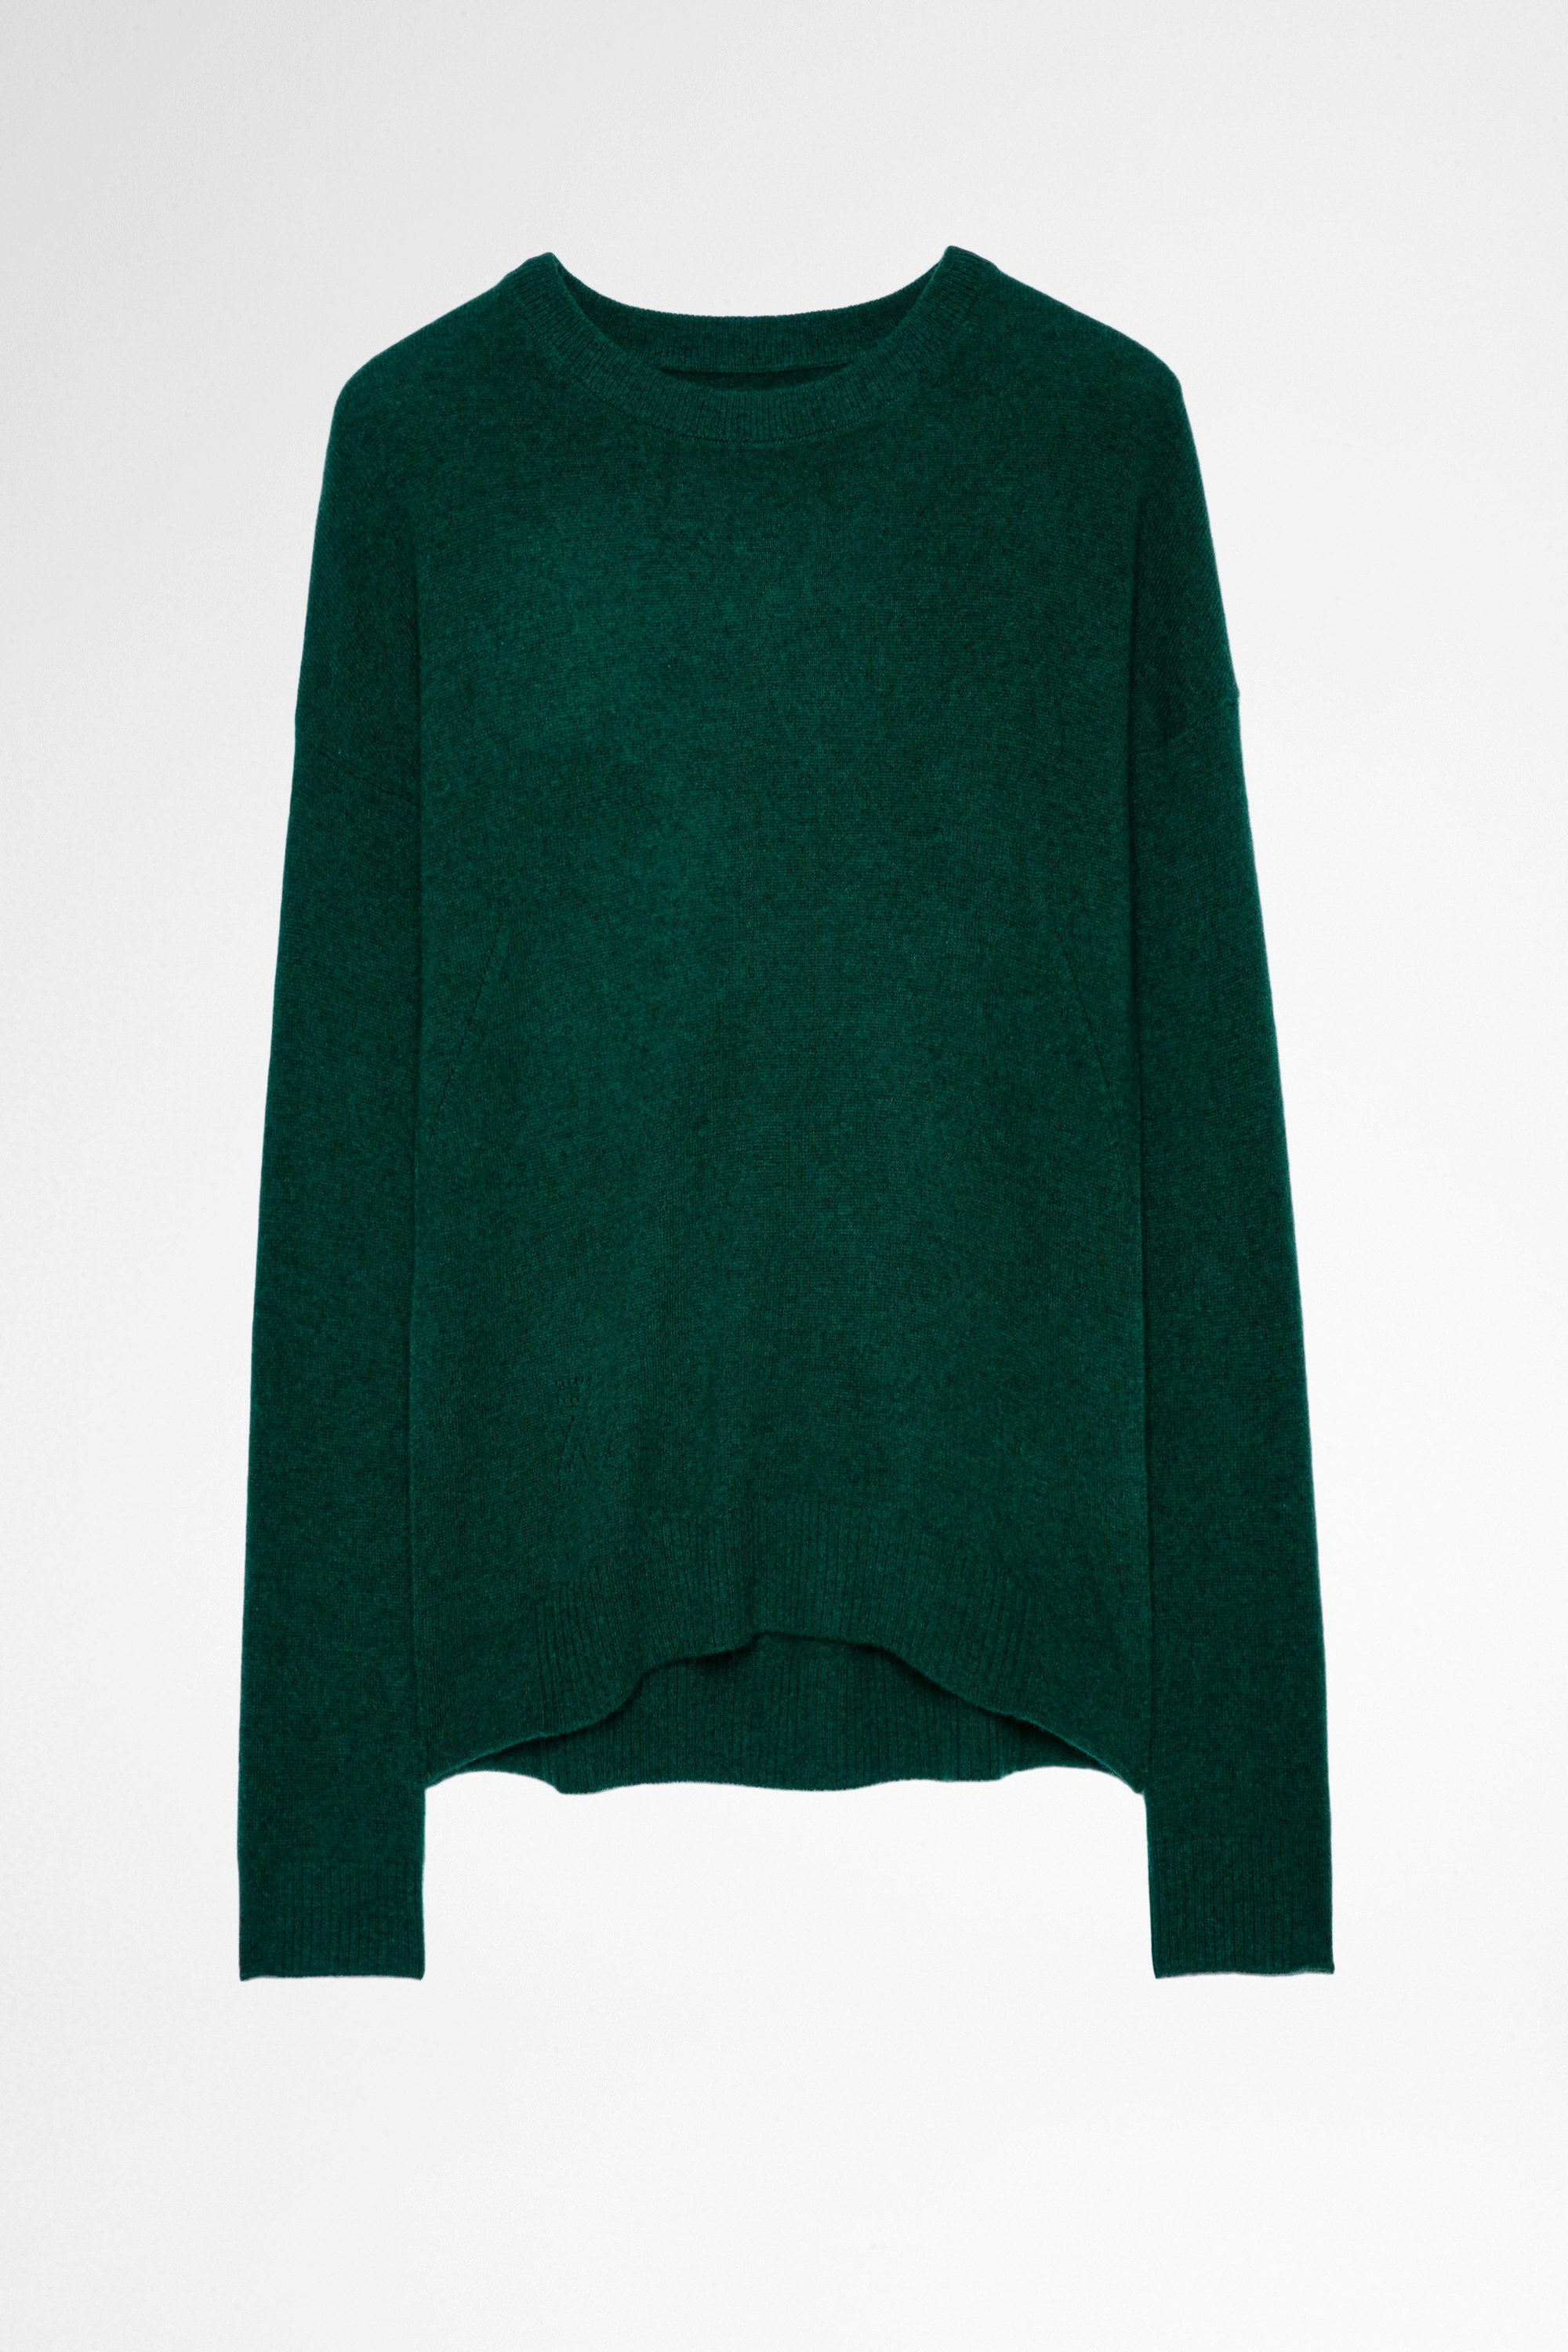 Jersey Cici Patch Cachemira Jersey de mujer de cachemira verde con parches de rayos